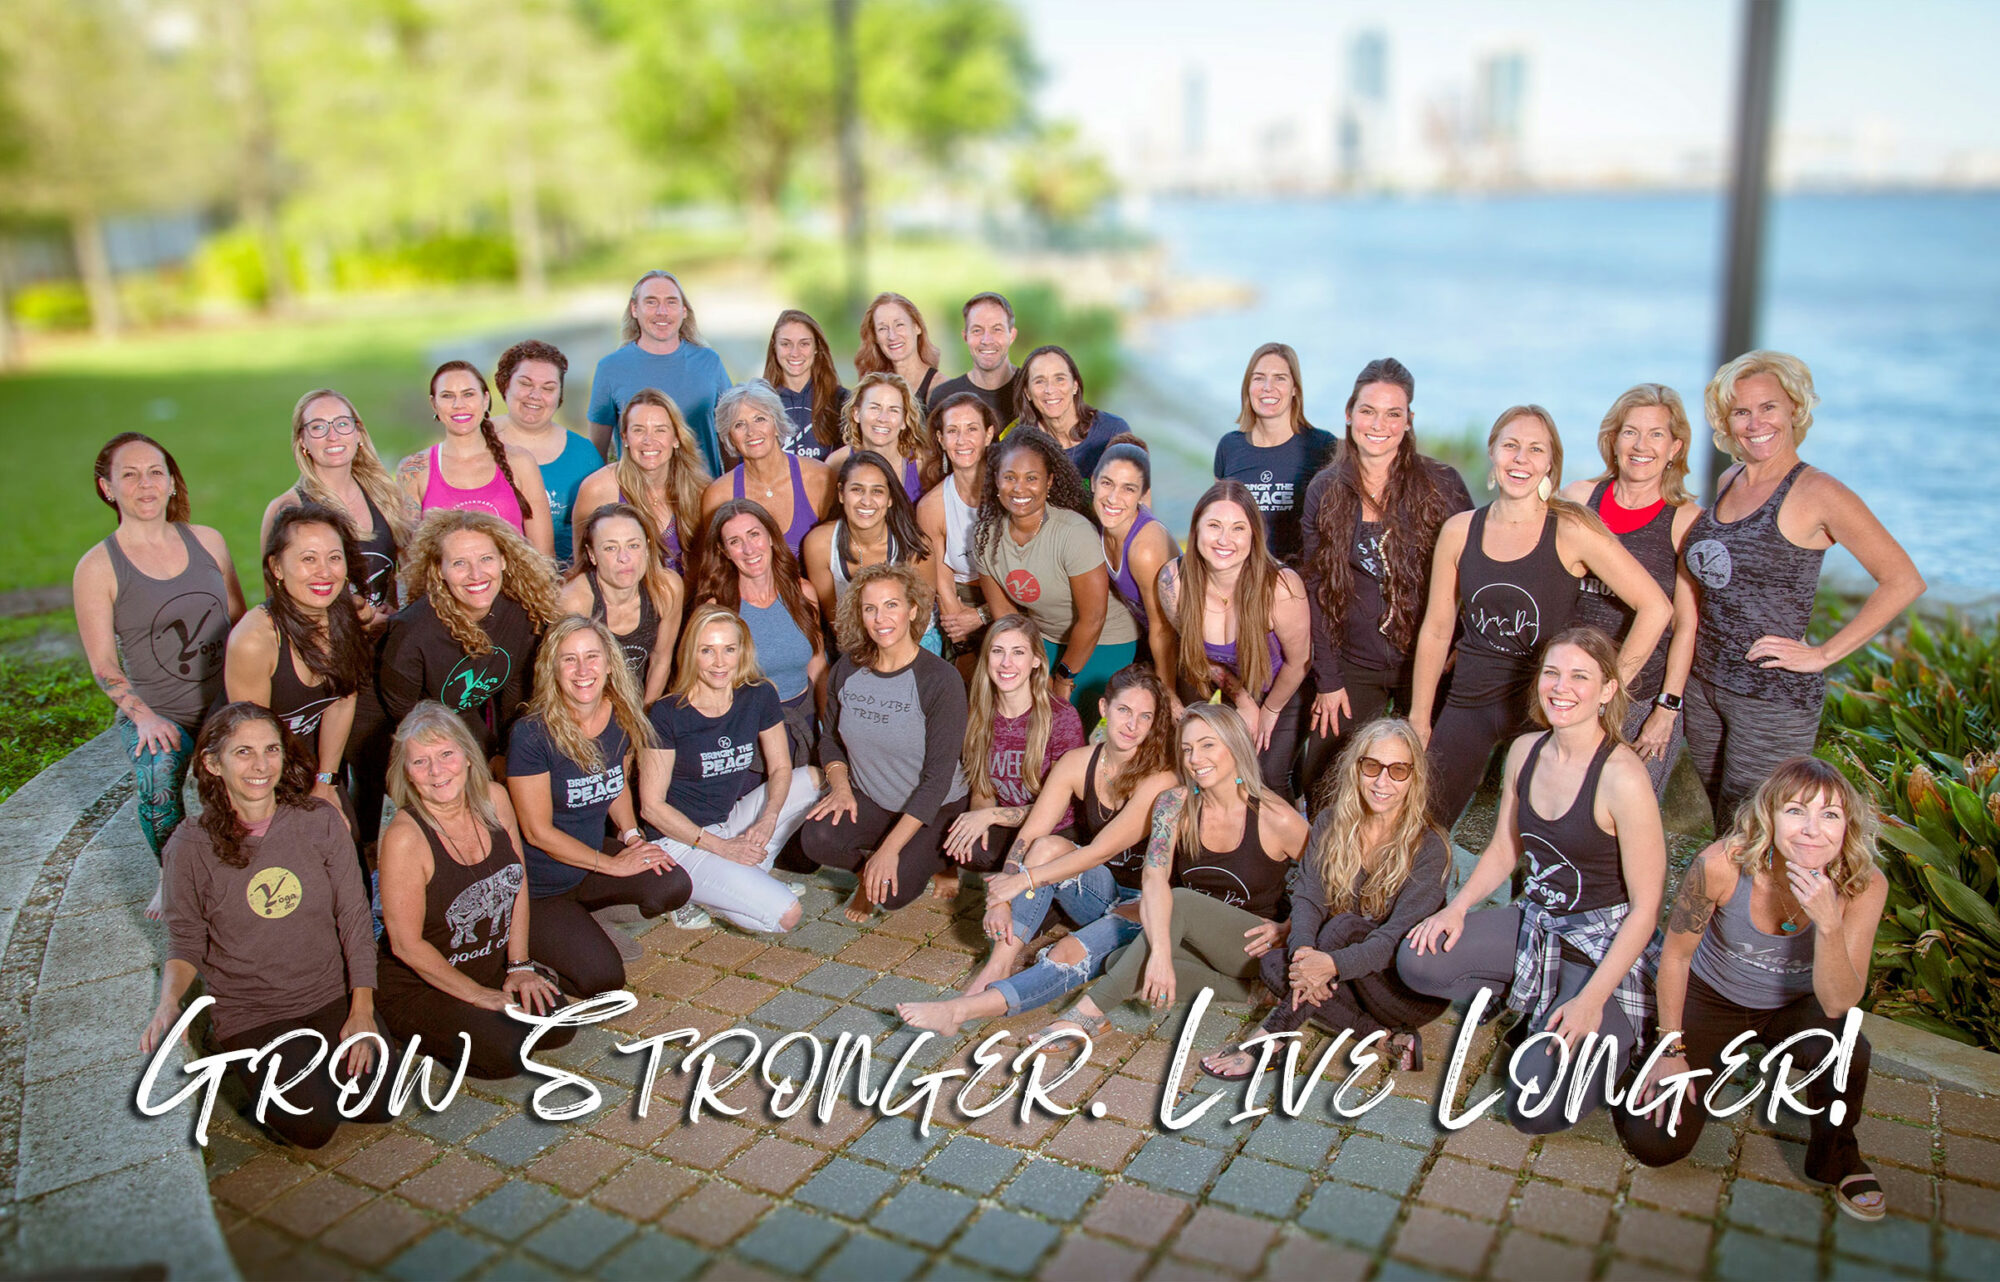 Yoga Den yoga studio in Jacksonville, Fl